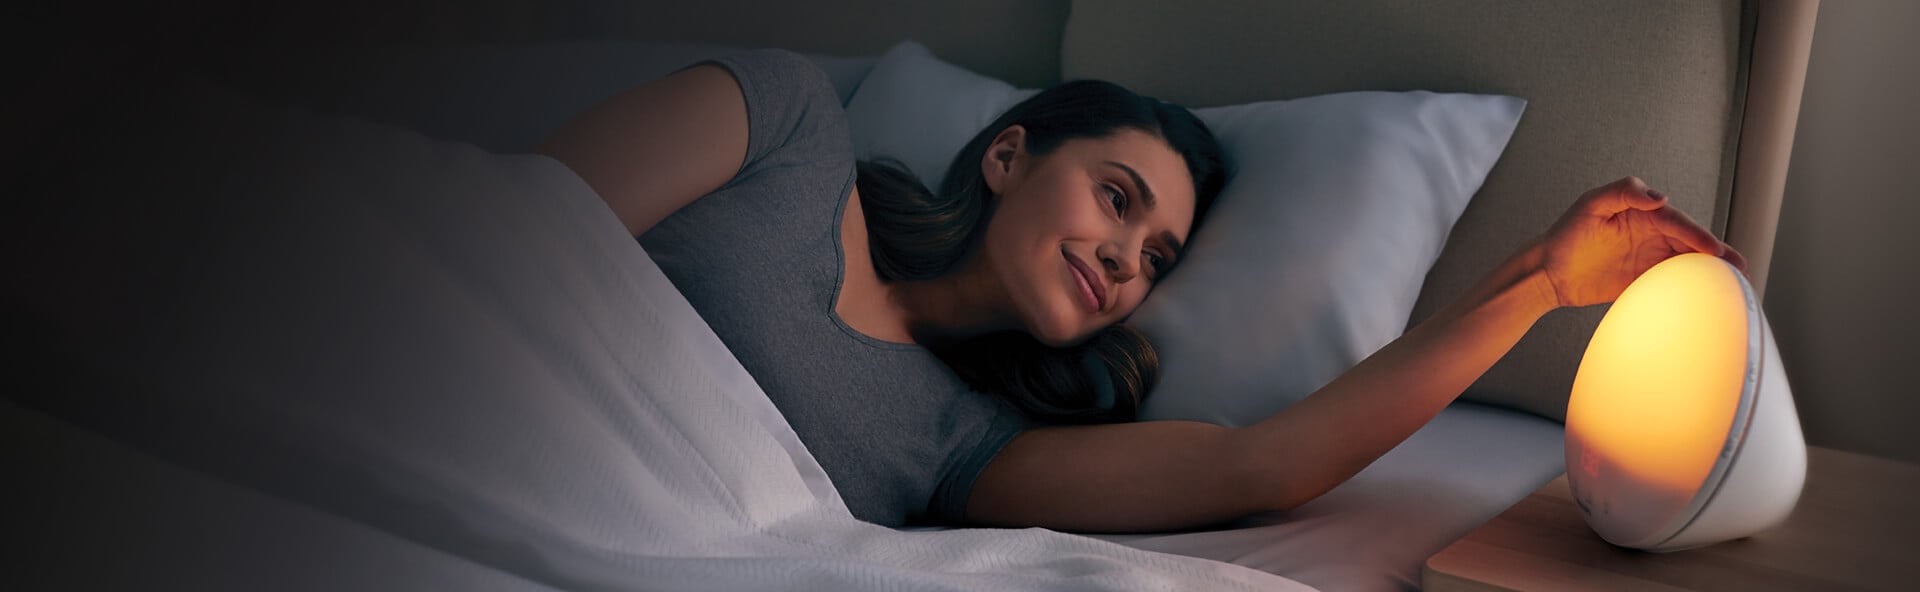 Woman waking up using a Philips sleep and wake up light